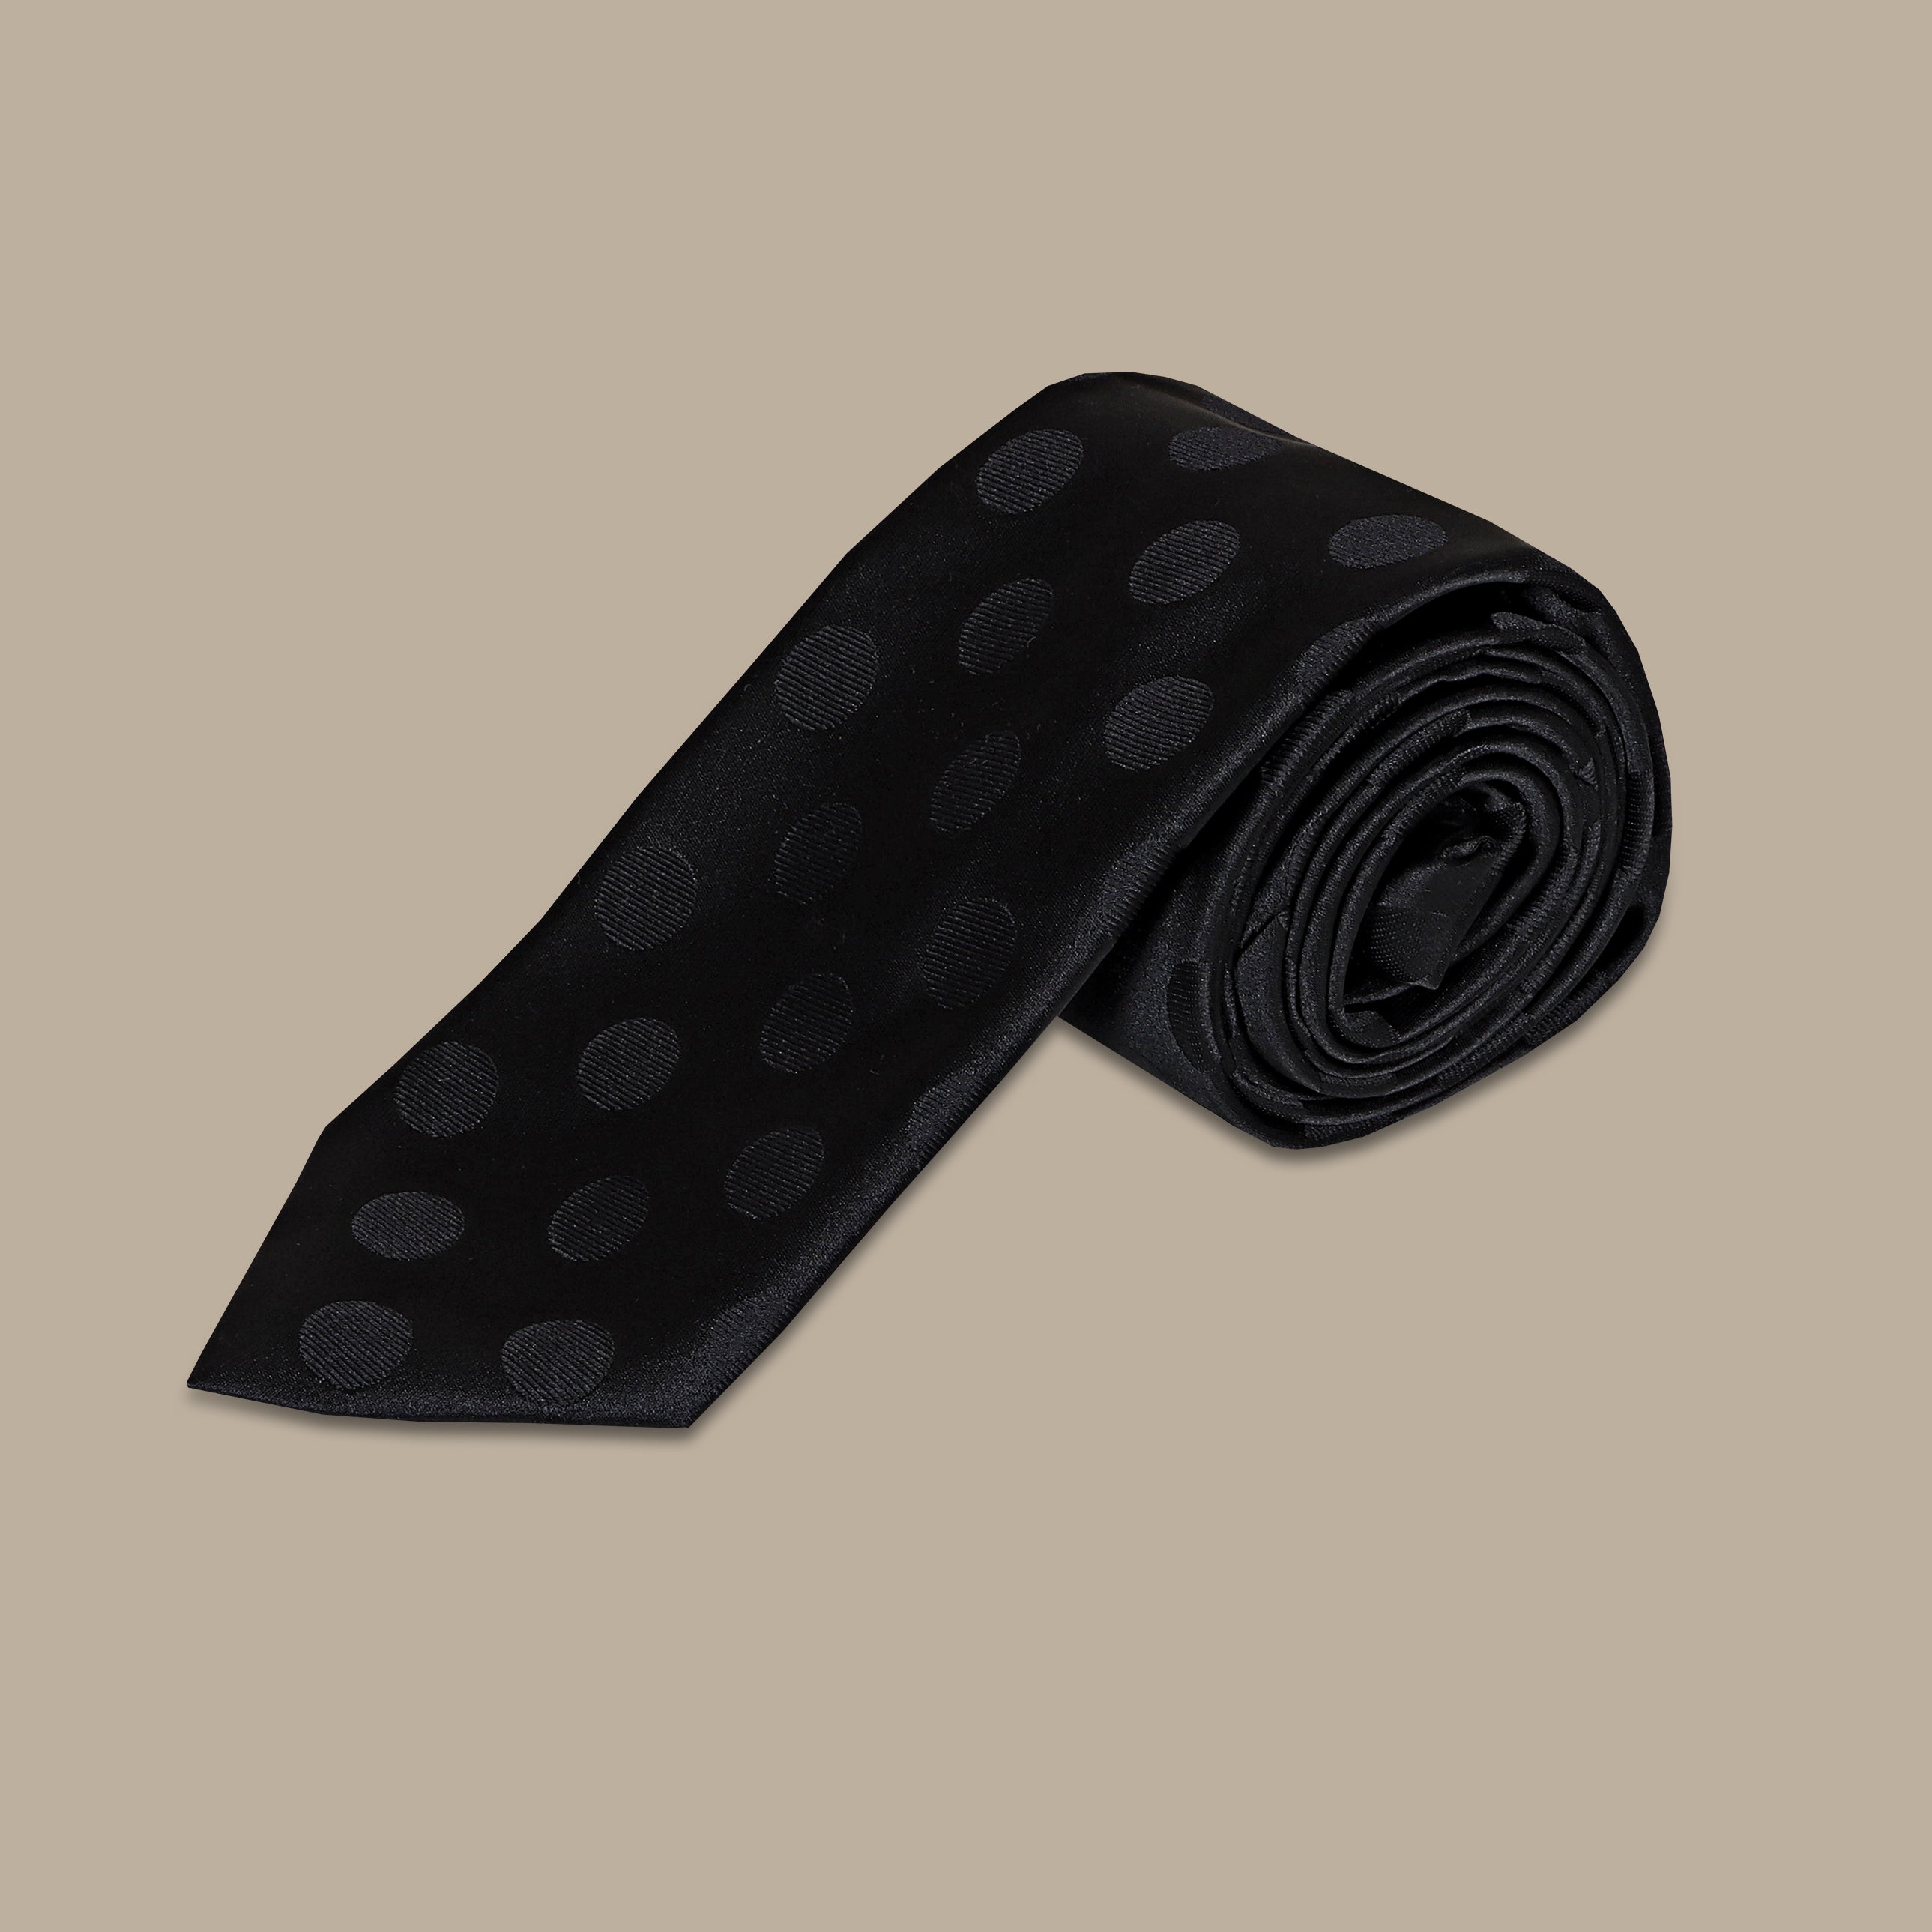 Classic Noir: Black Polka Dotted Tie Set